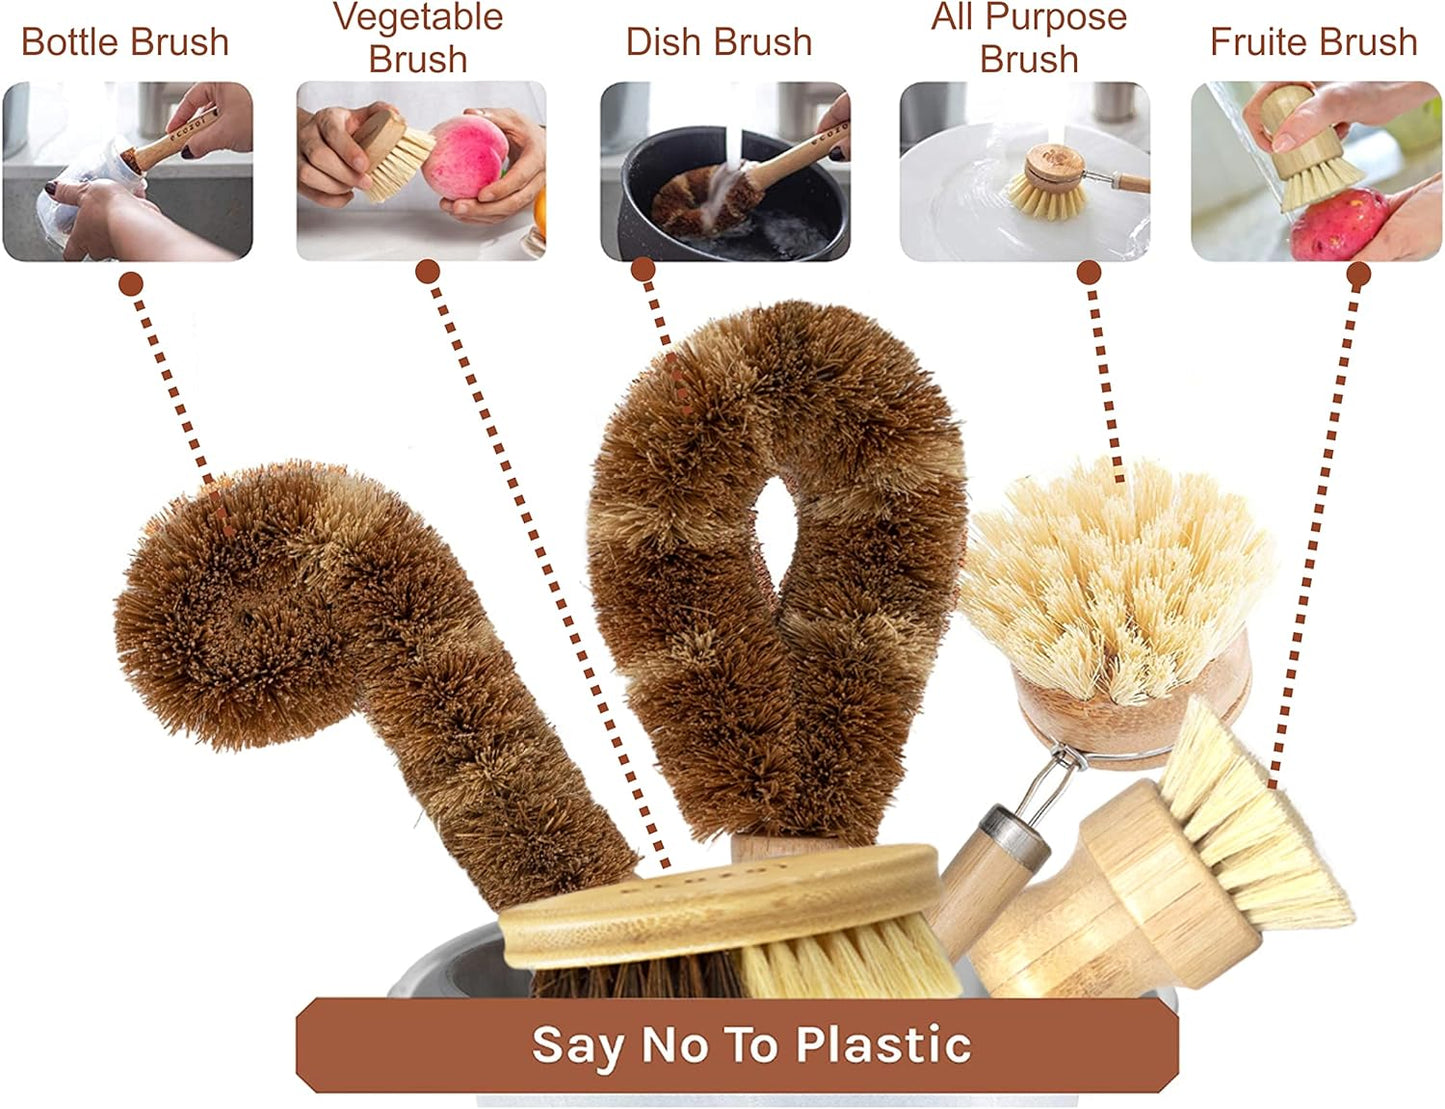 Dish Brush Set, 6 Piece Kitchen Scrub Brush Set, Plant Based Vegetable Brush Set by ecozoi